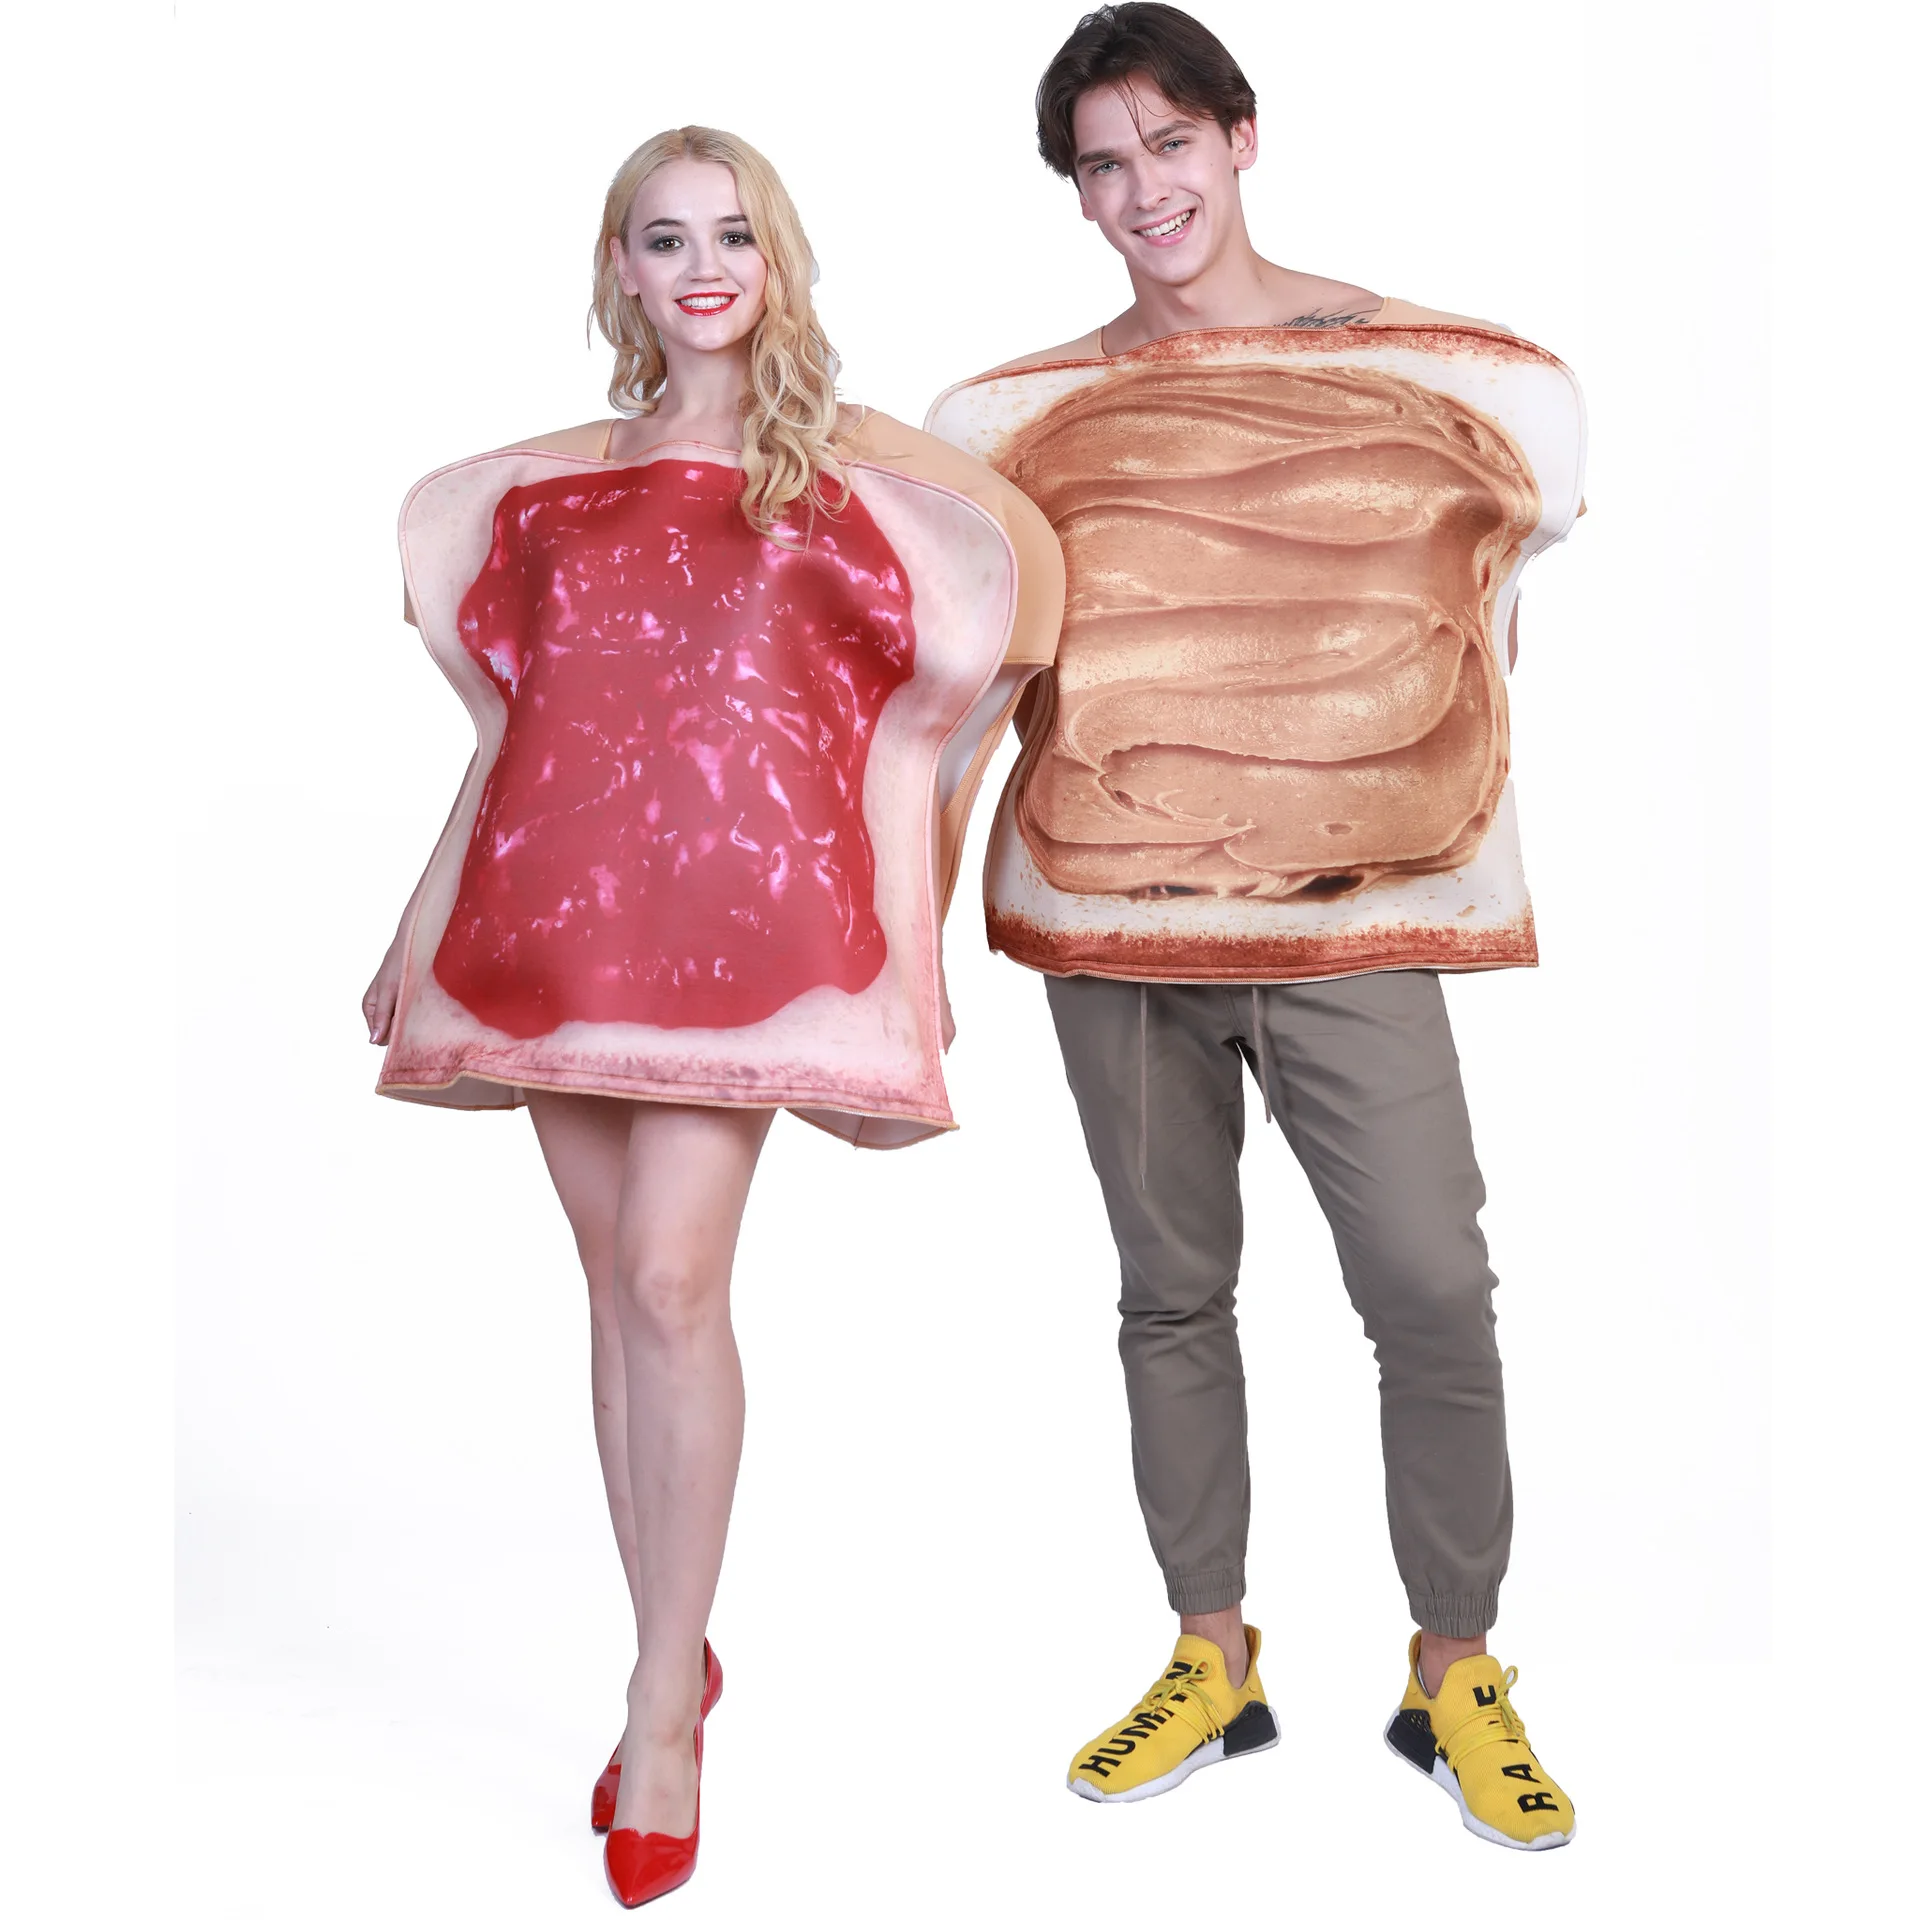 Engraçado casal geléia comida conjunto, festa de Halloween vestir traje